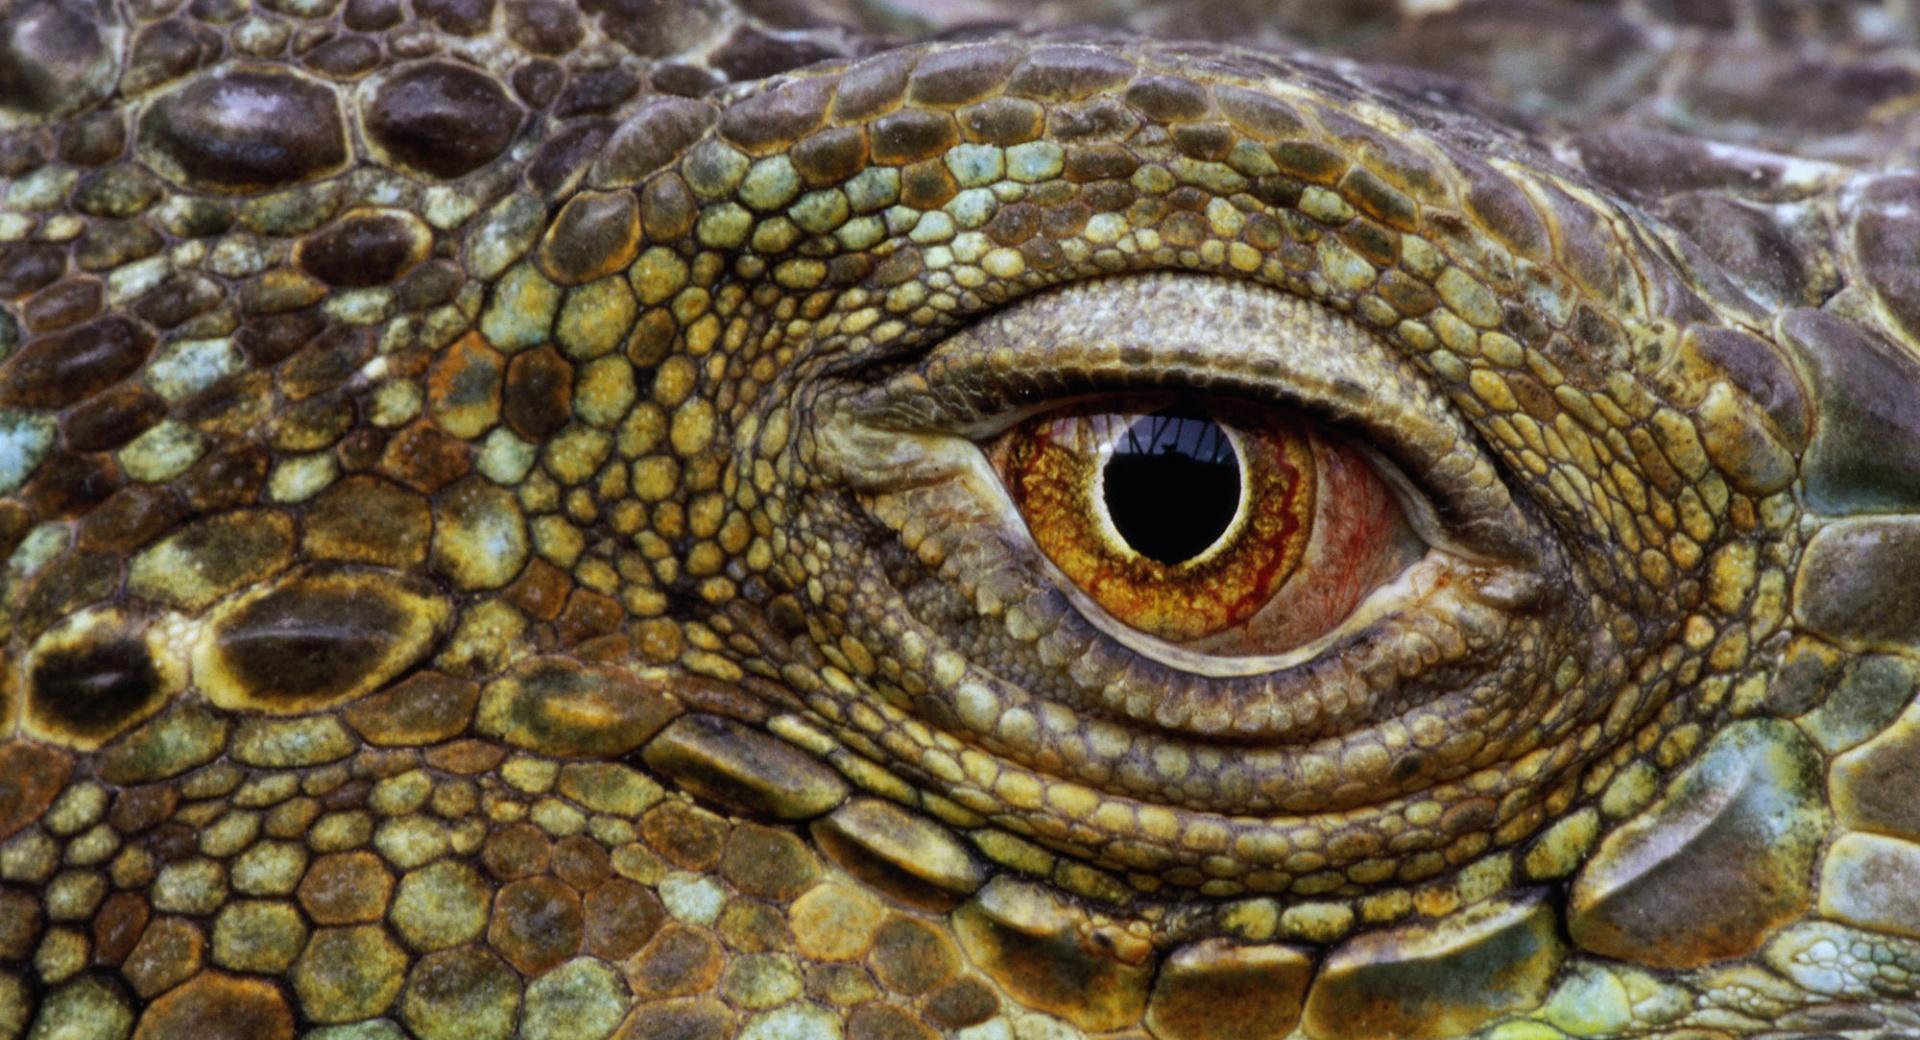 Crocodile Eye at 1280 x 960 size wallpapers HD quality